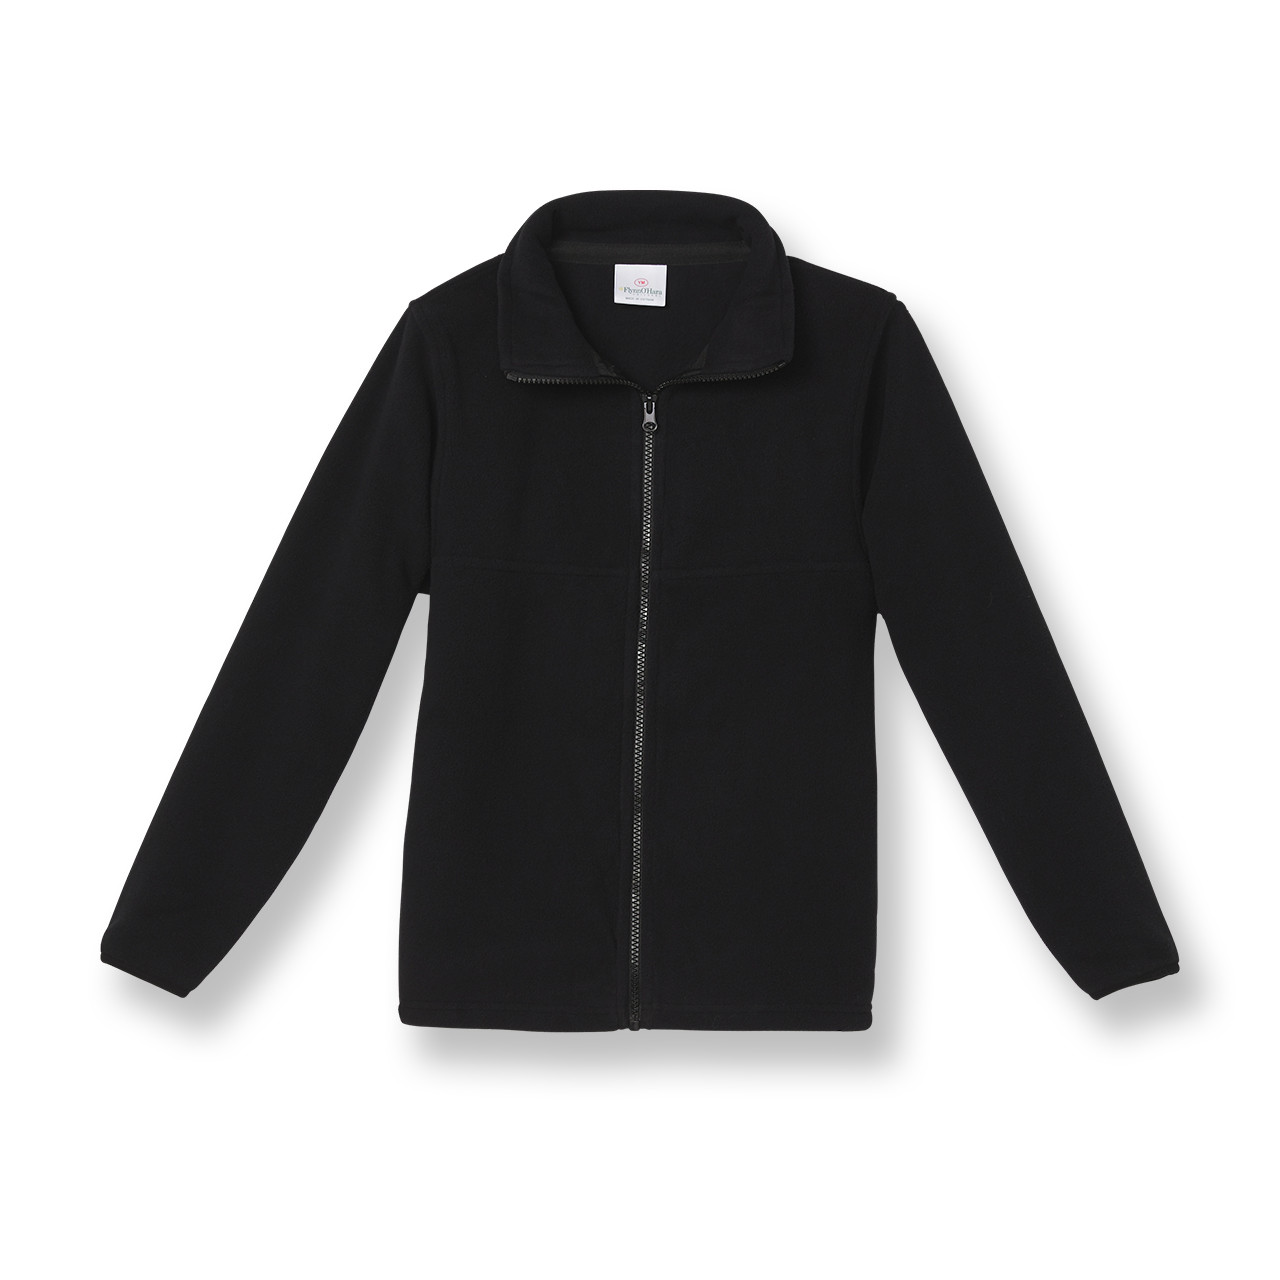 Women's Benton Springs™ Full Zip Fleece Jacket | Columbia Sportswear